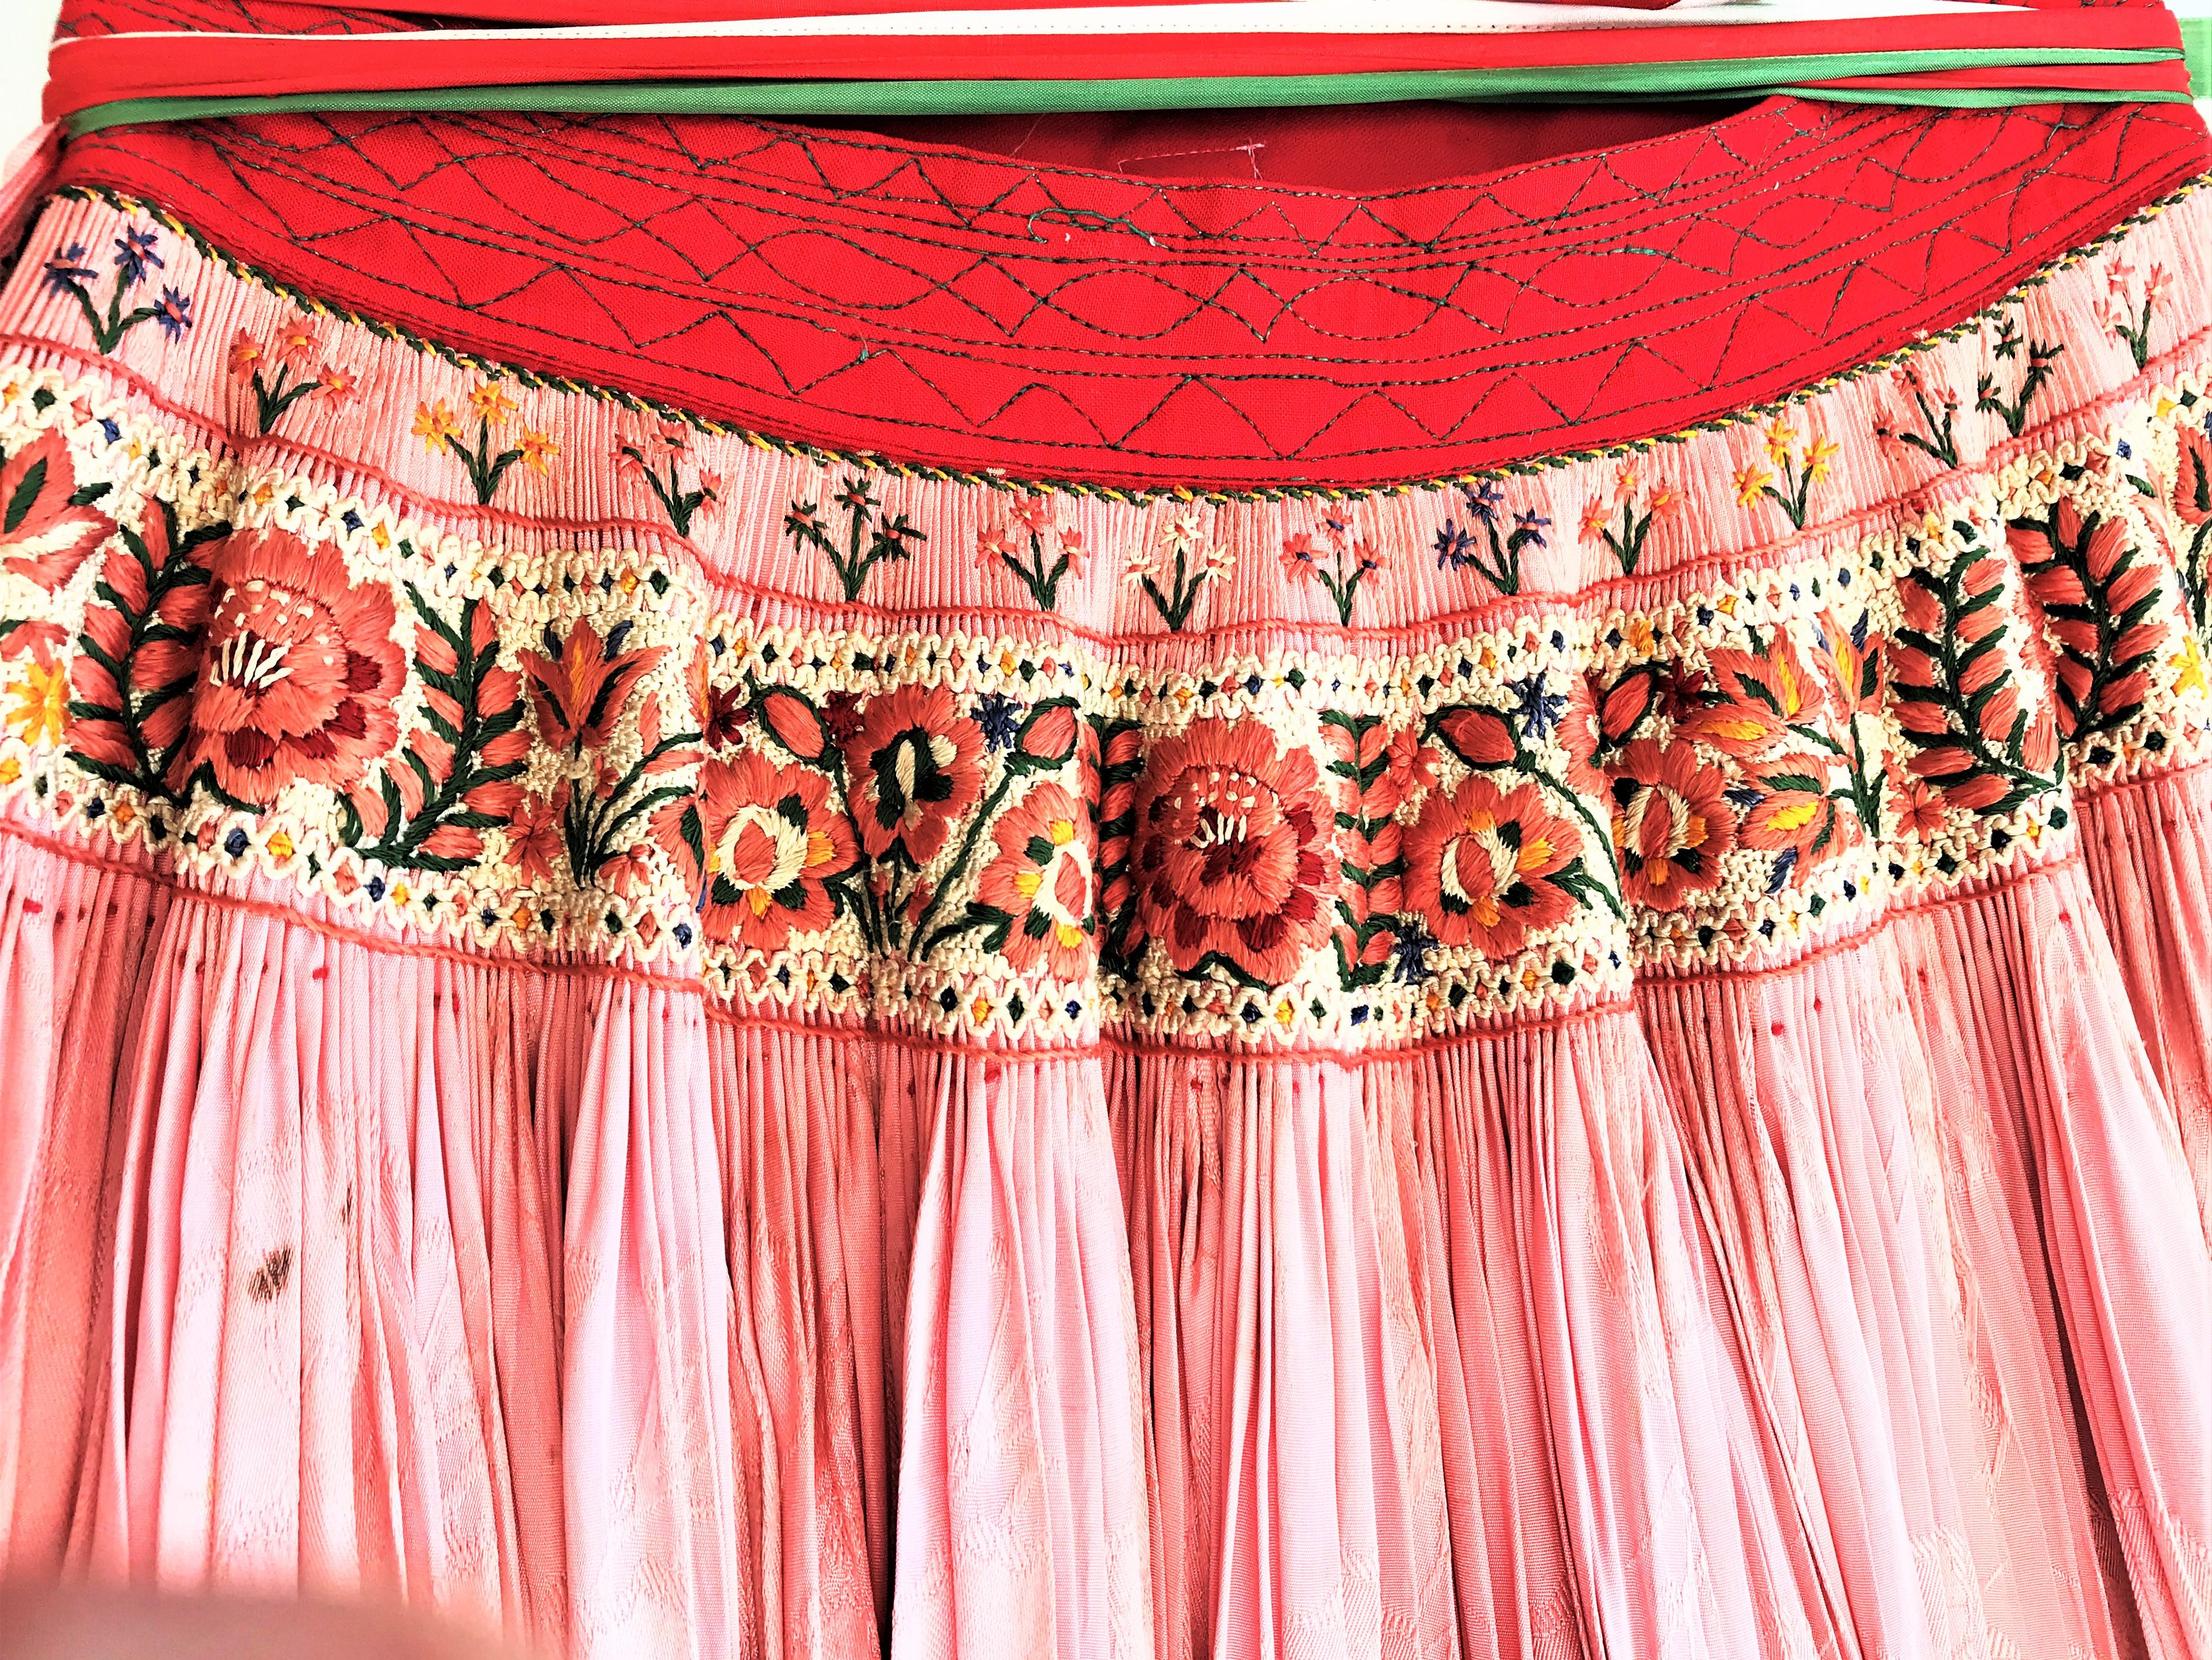 hungarian skirt